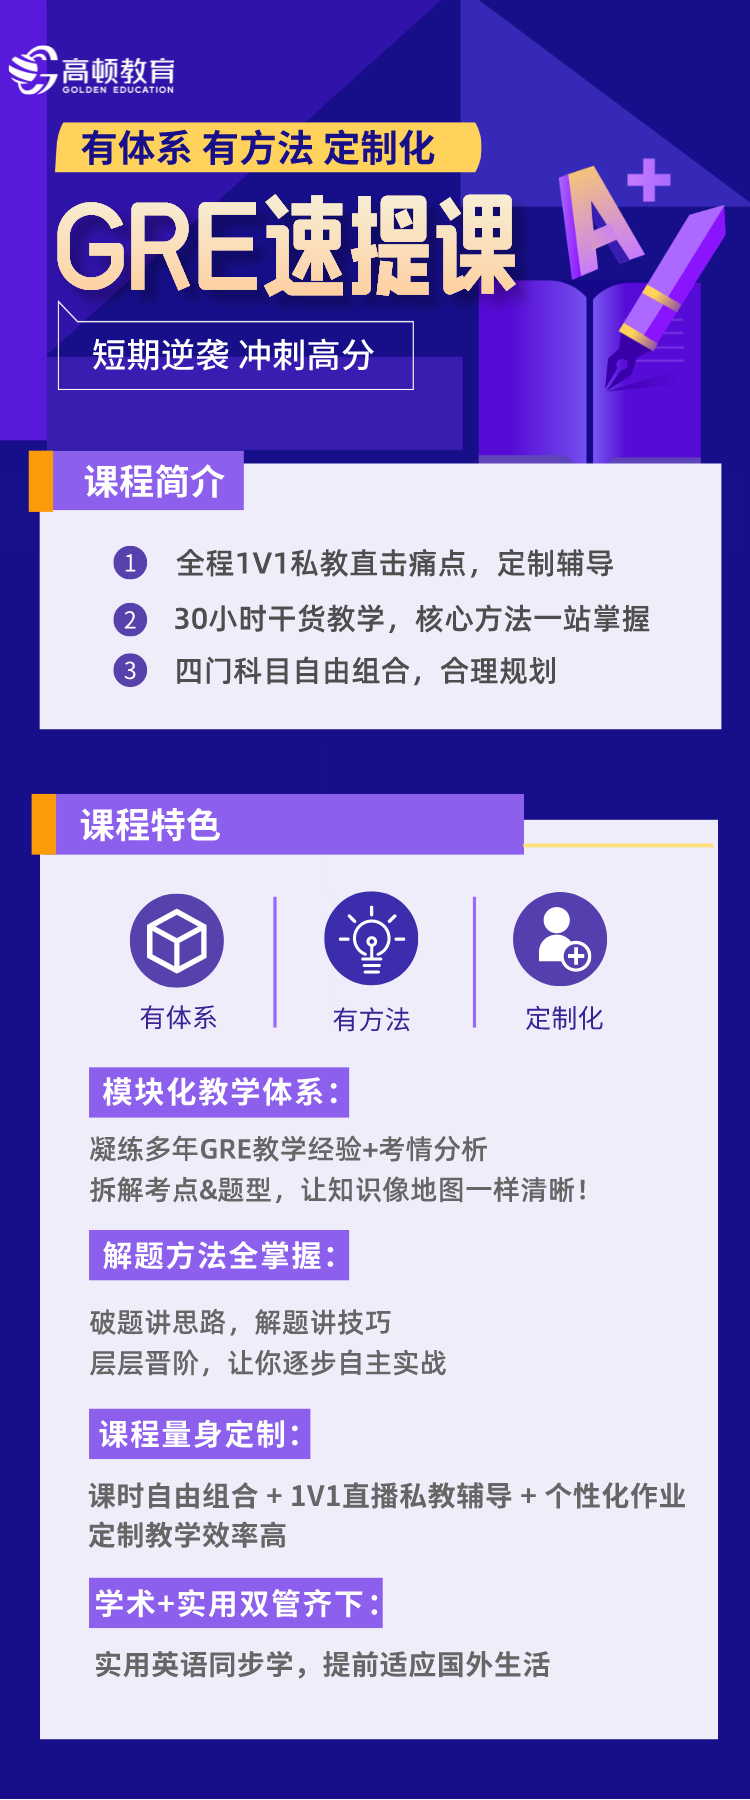 https://simg01.gaodunwangxiao.com/uploadfiles/product-center/202211/18/9f8d1_20221118162550.png